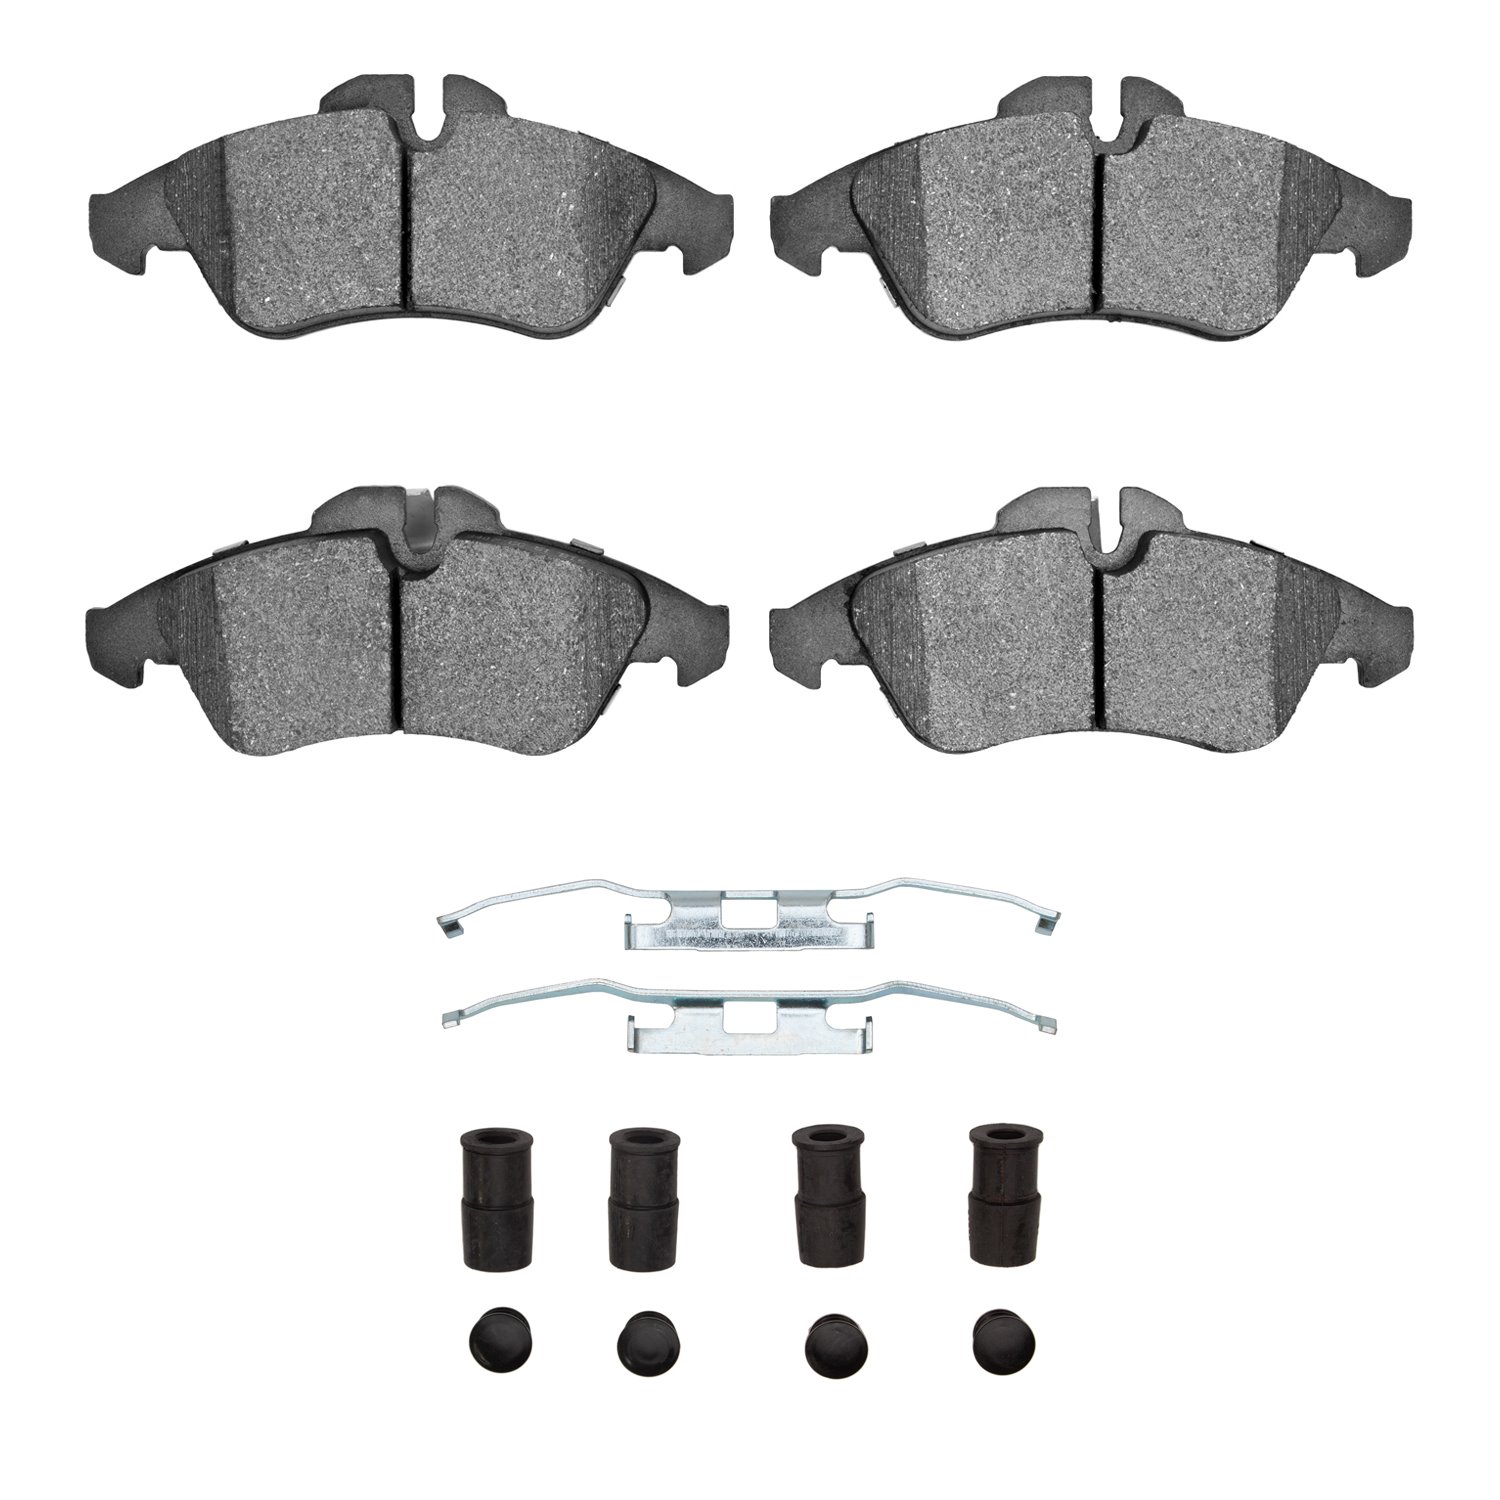 1214-1177-01 Heavy-Duty Brake Pads & Hardware Kit, 2002-2006 Multiple Makes/Models, Position: Fr,Front